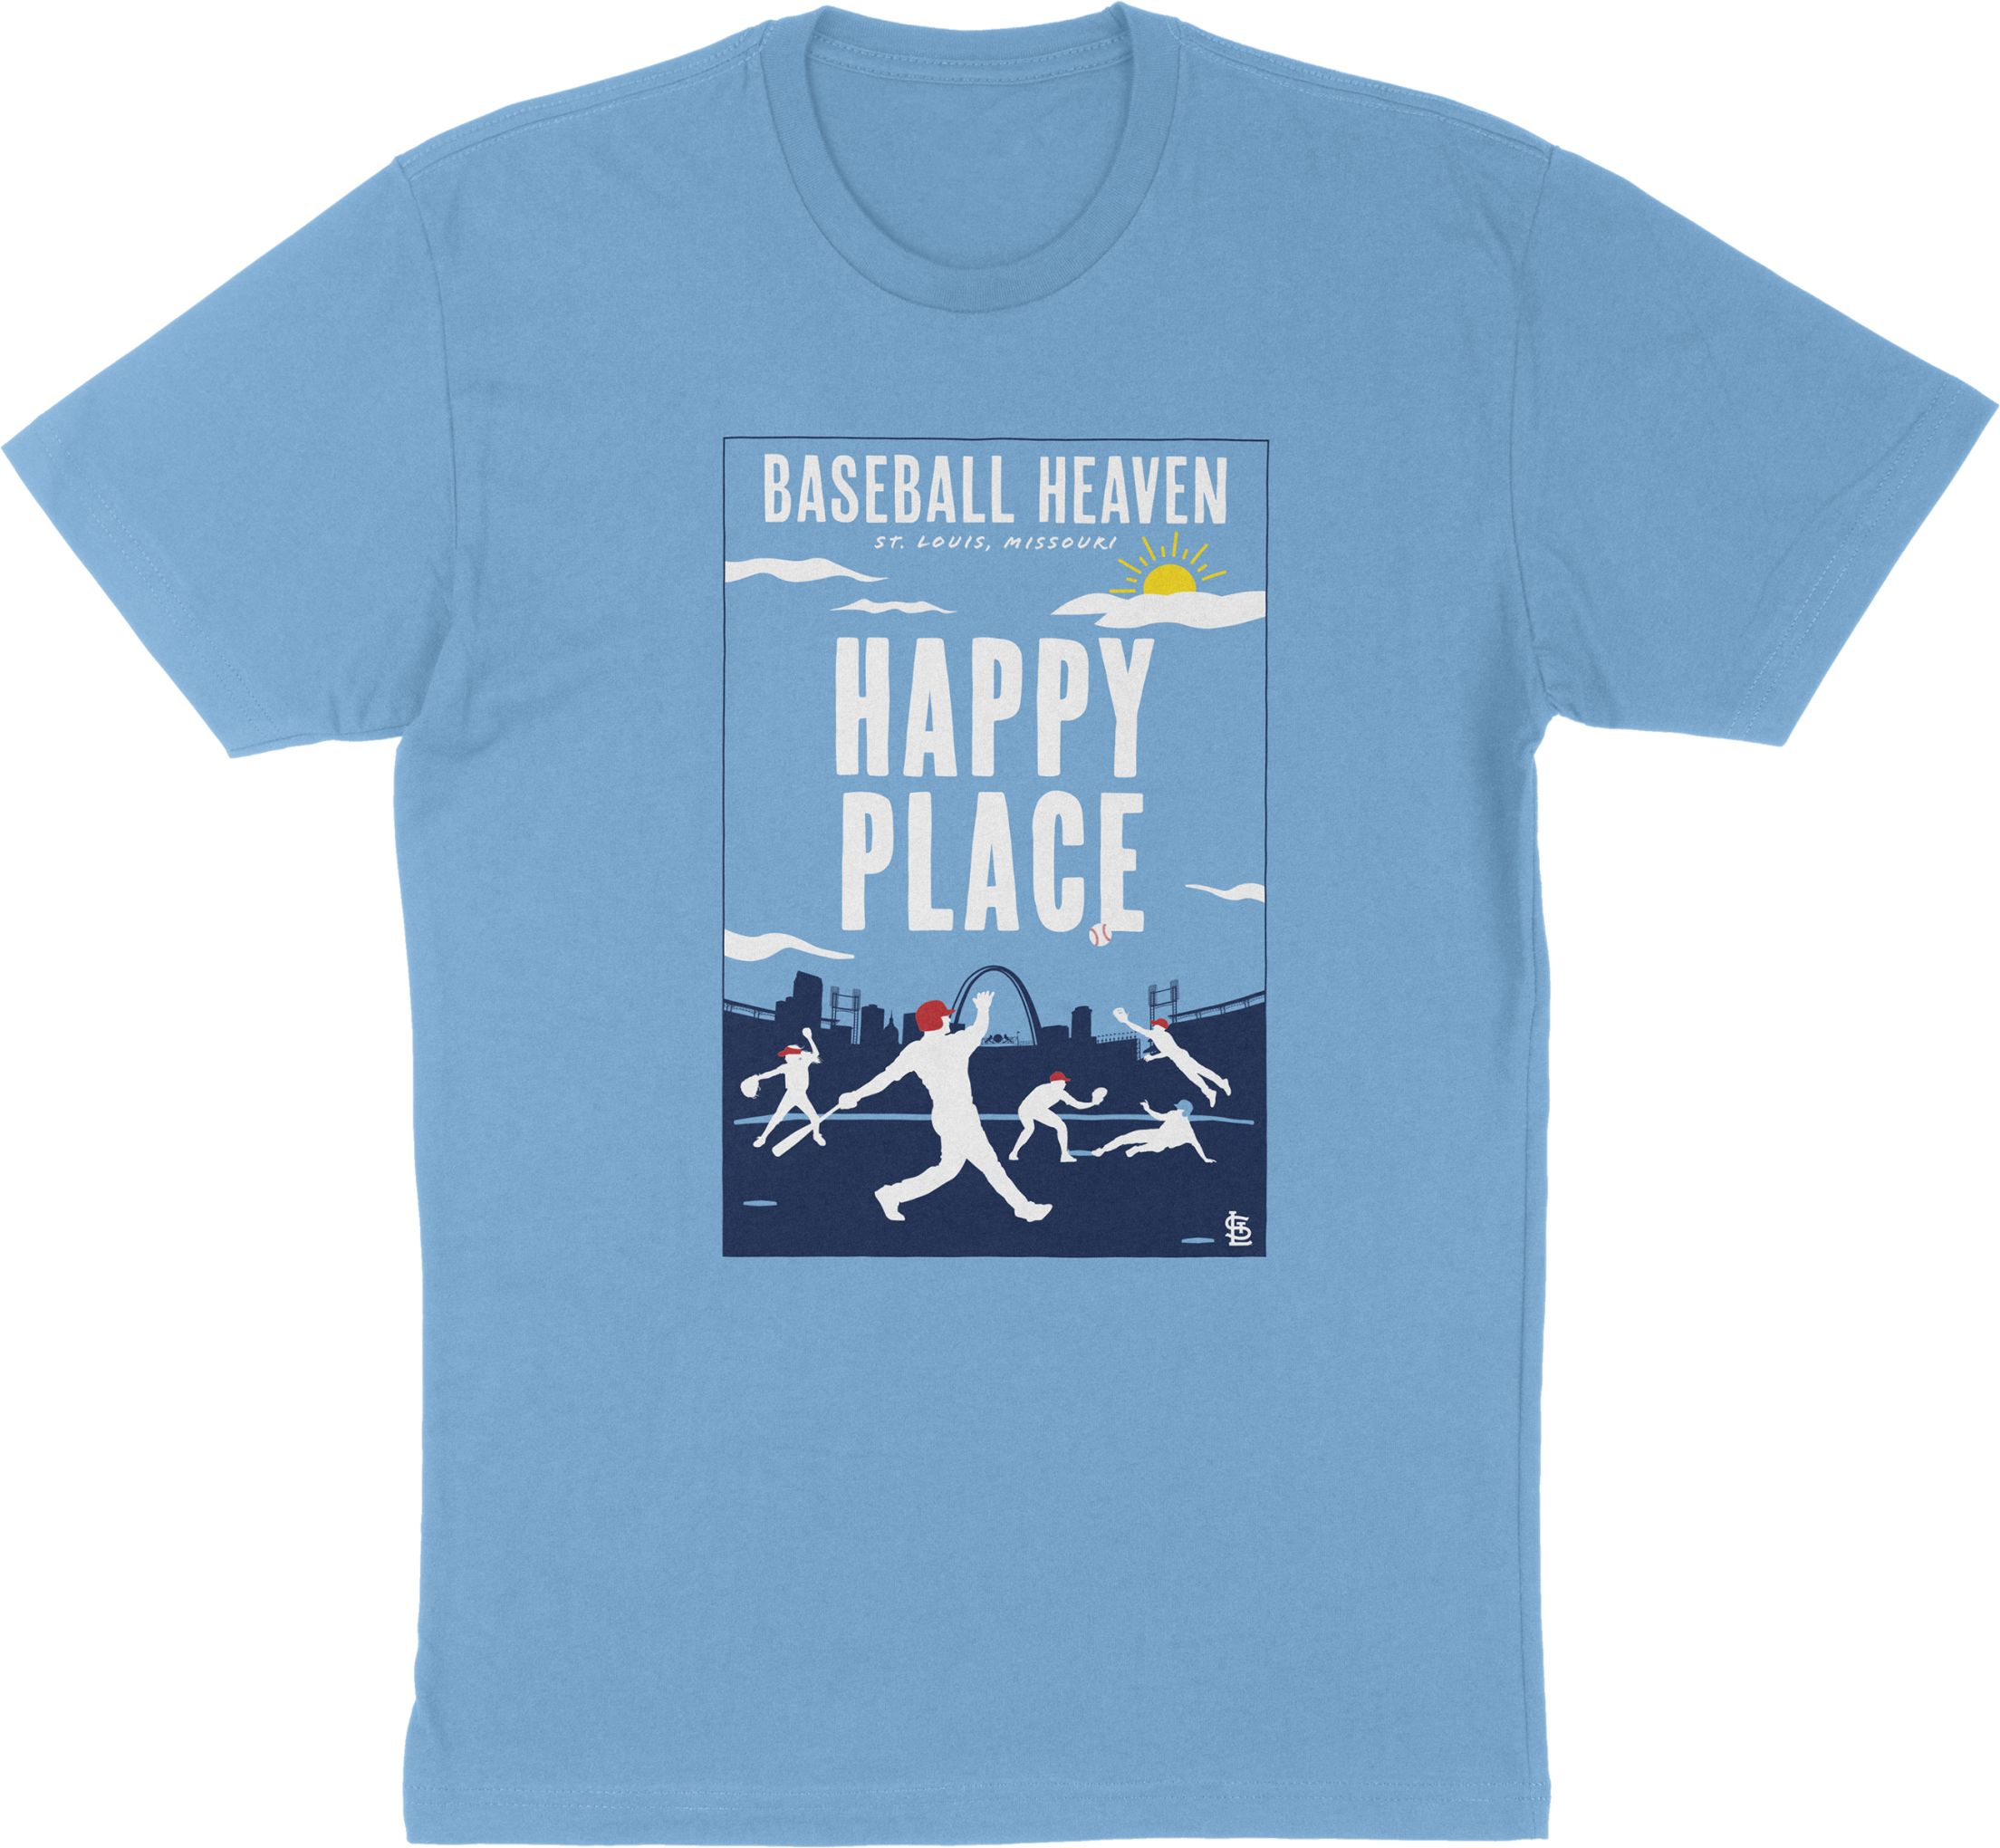 MLB Team Apparel Toddler St. Louis Cardinals T-Shirt & Short Set